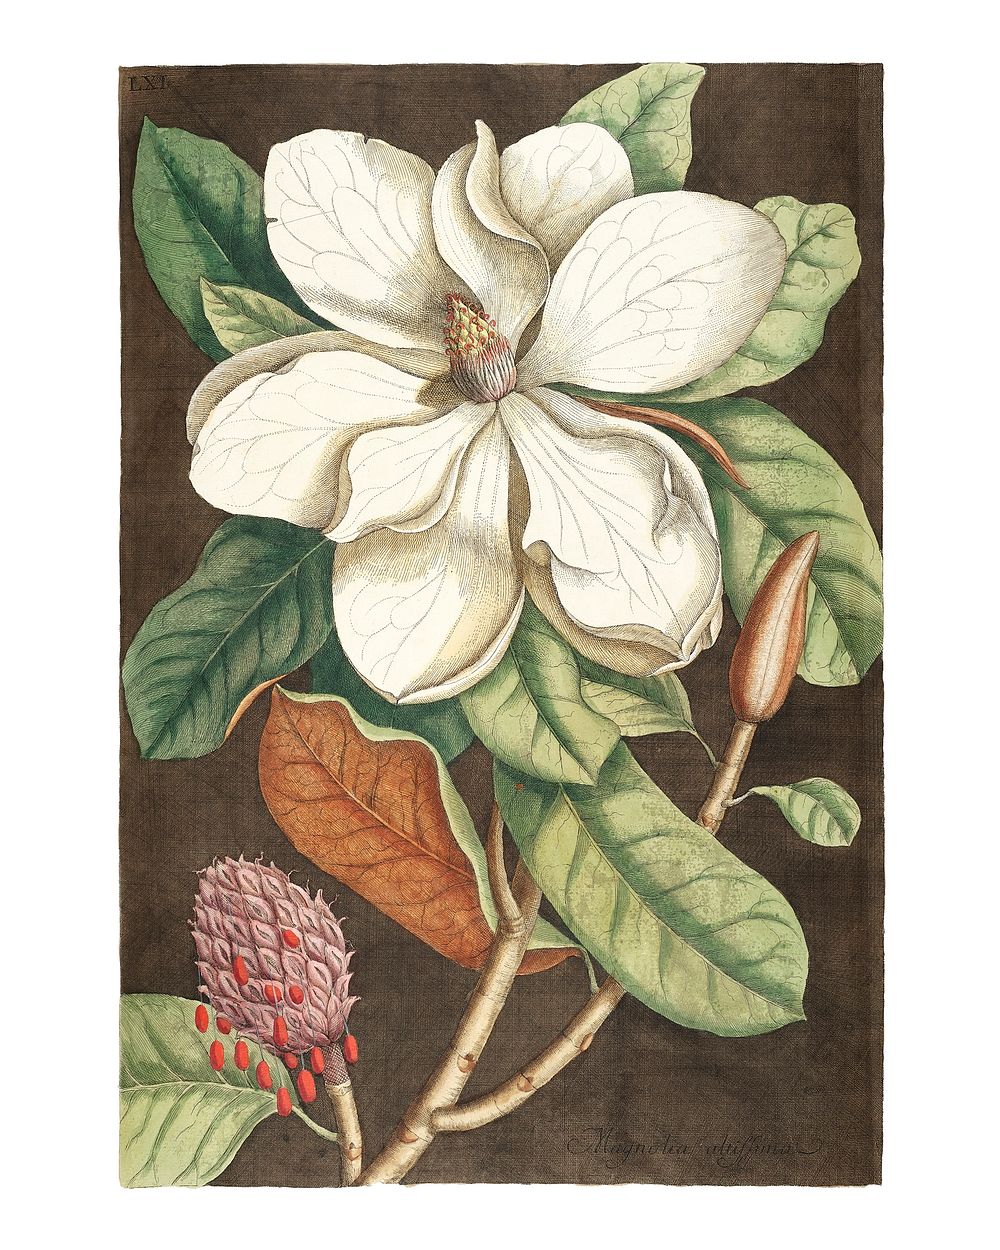 Vintage Laurel Tree (Magnolia altissima) illustration wall art print and poster.